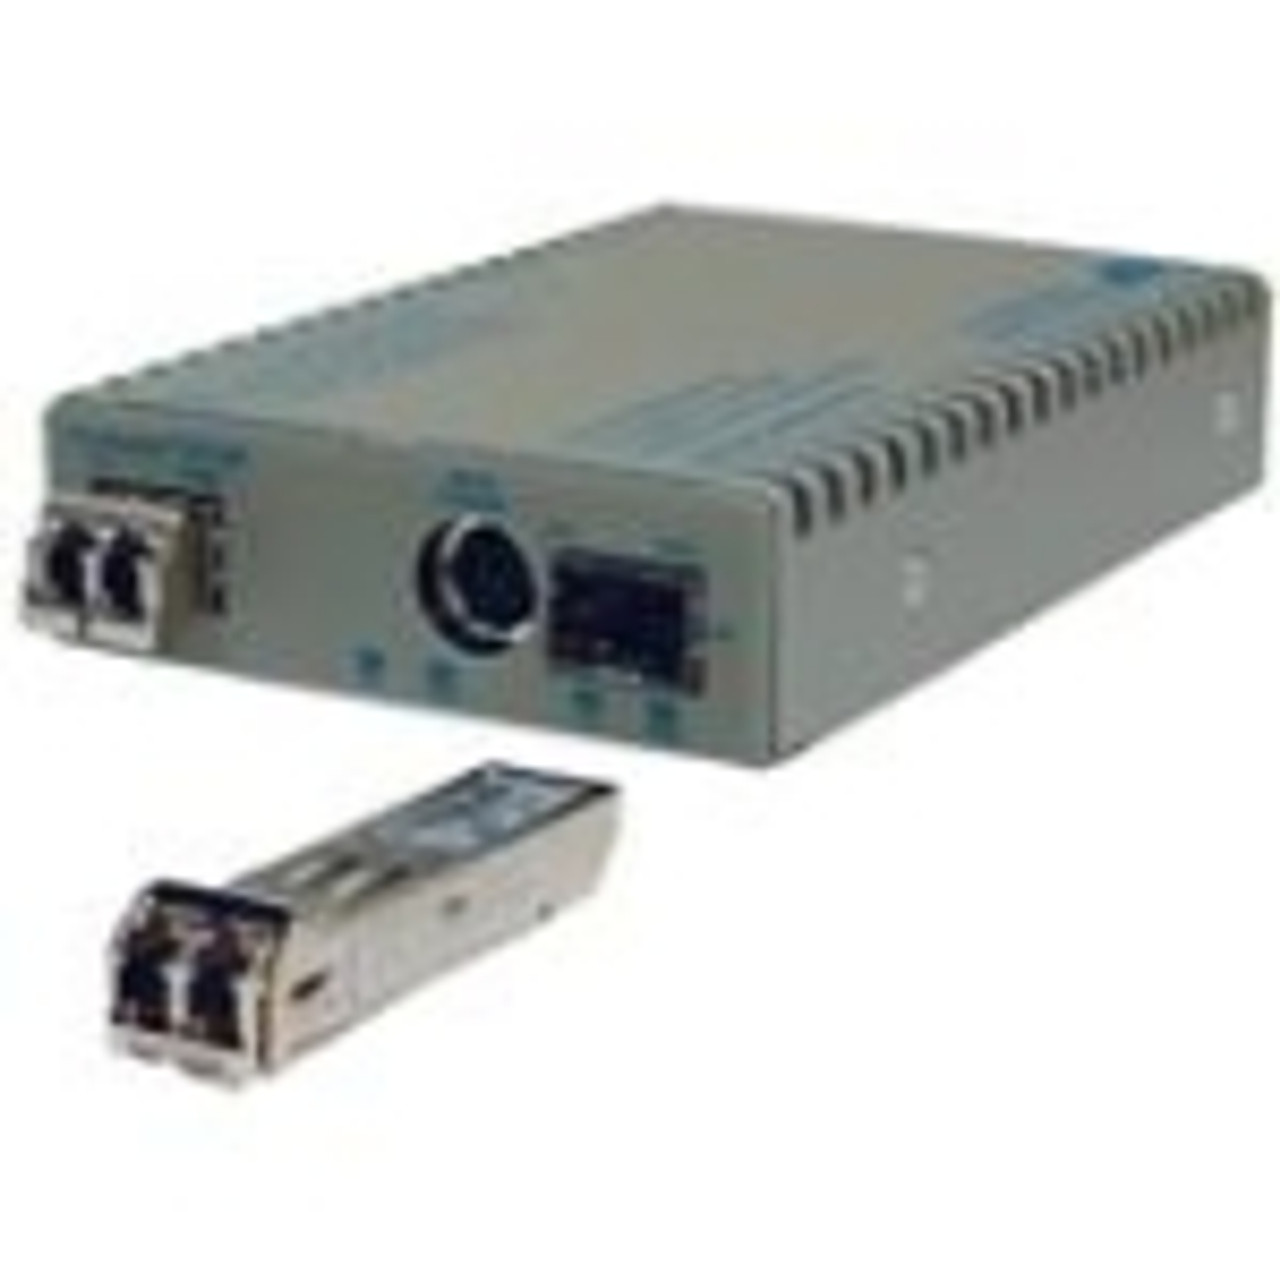 7141-3 Omnitron Systems 100Mbps 100Base-X CWDM Single-mode Fiber 100km 1411nm SFP Transceiver Module